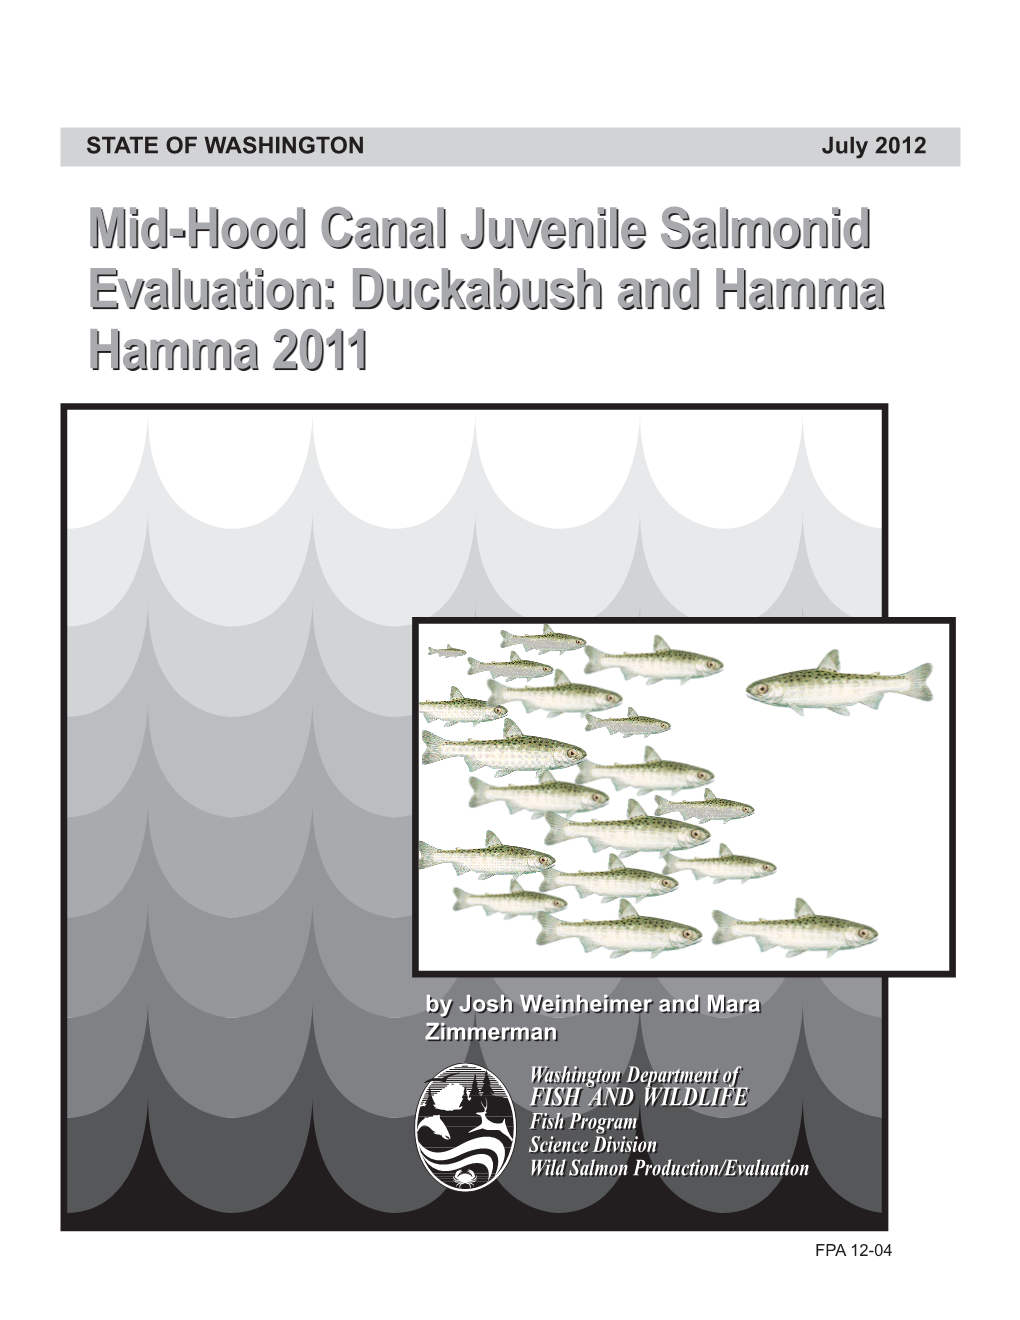 Mid-Hood Canal Juvenile Salmonid Evaluation: Duckabush and Hamma Hamma 2011